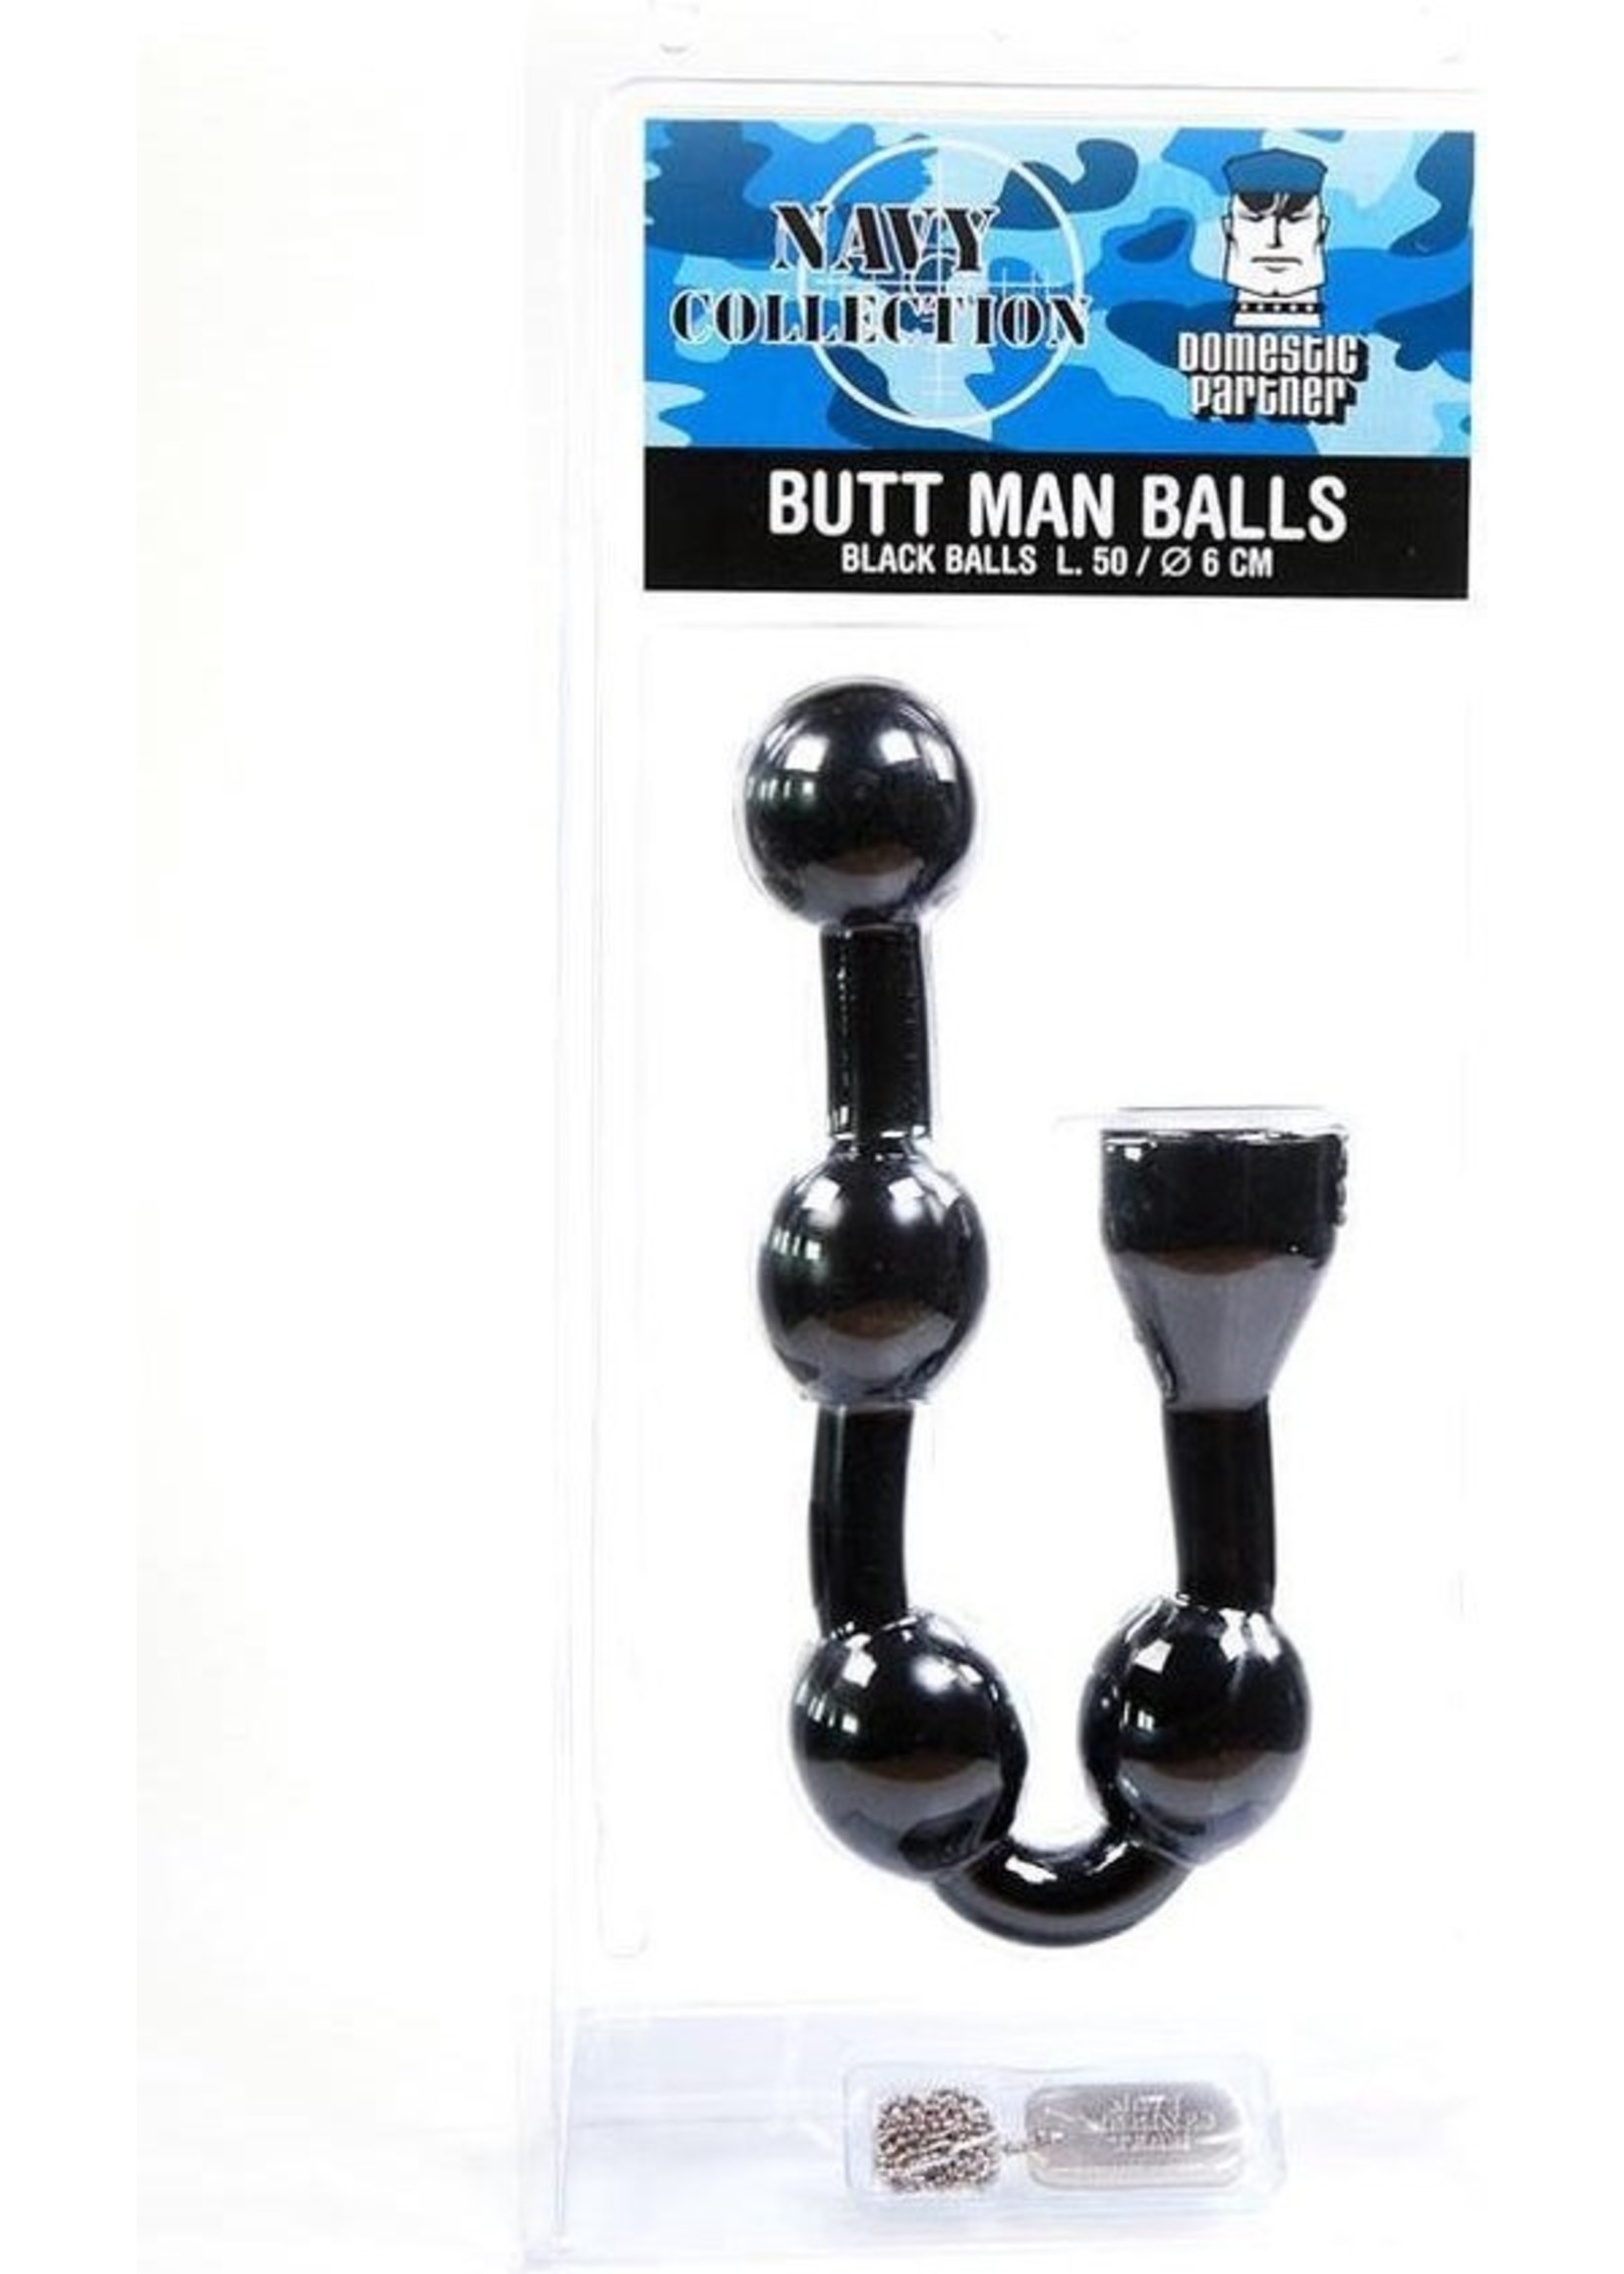 Domestic Partner Butt man balls 50 x 6 cm black